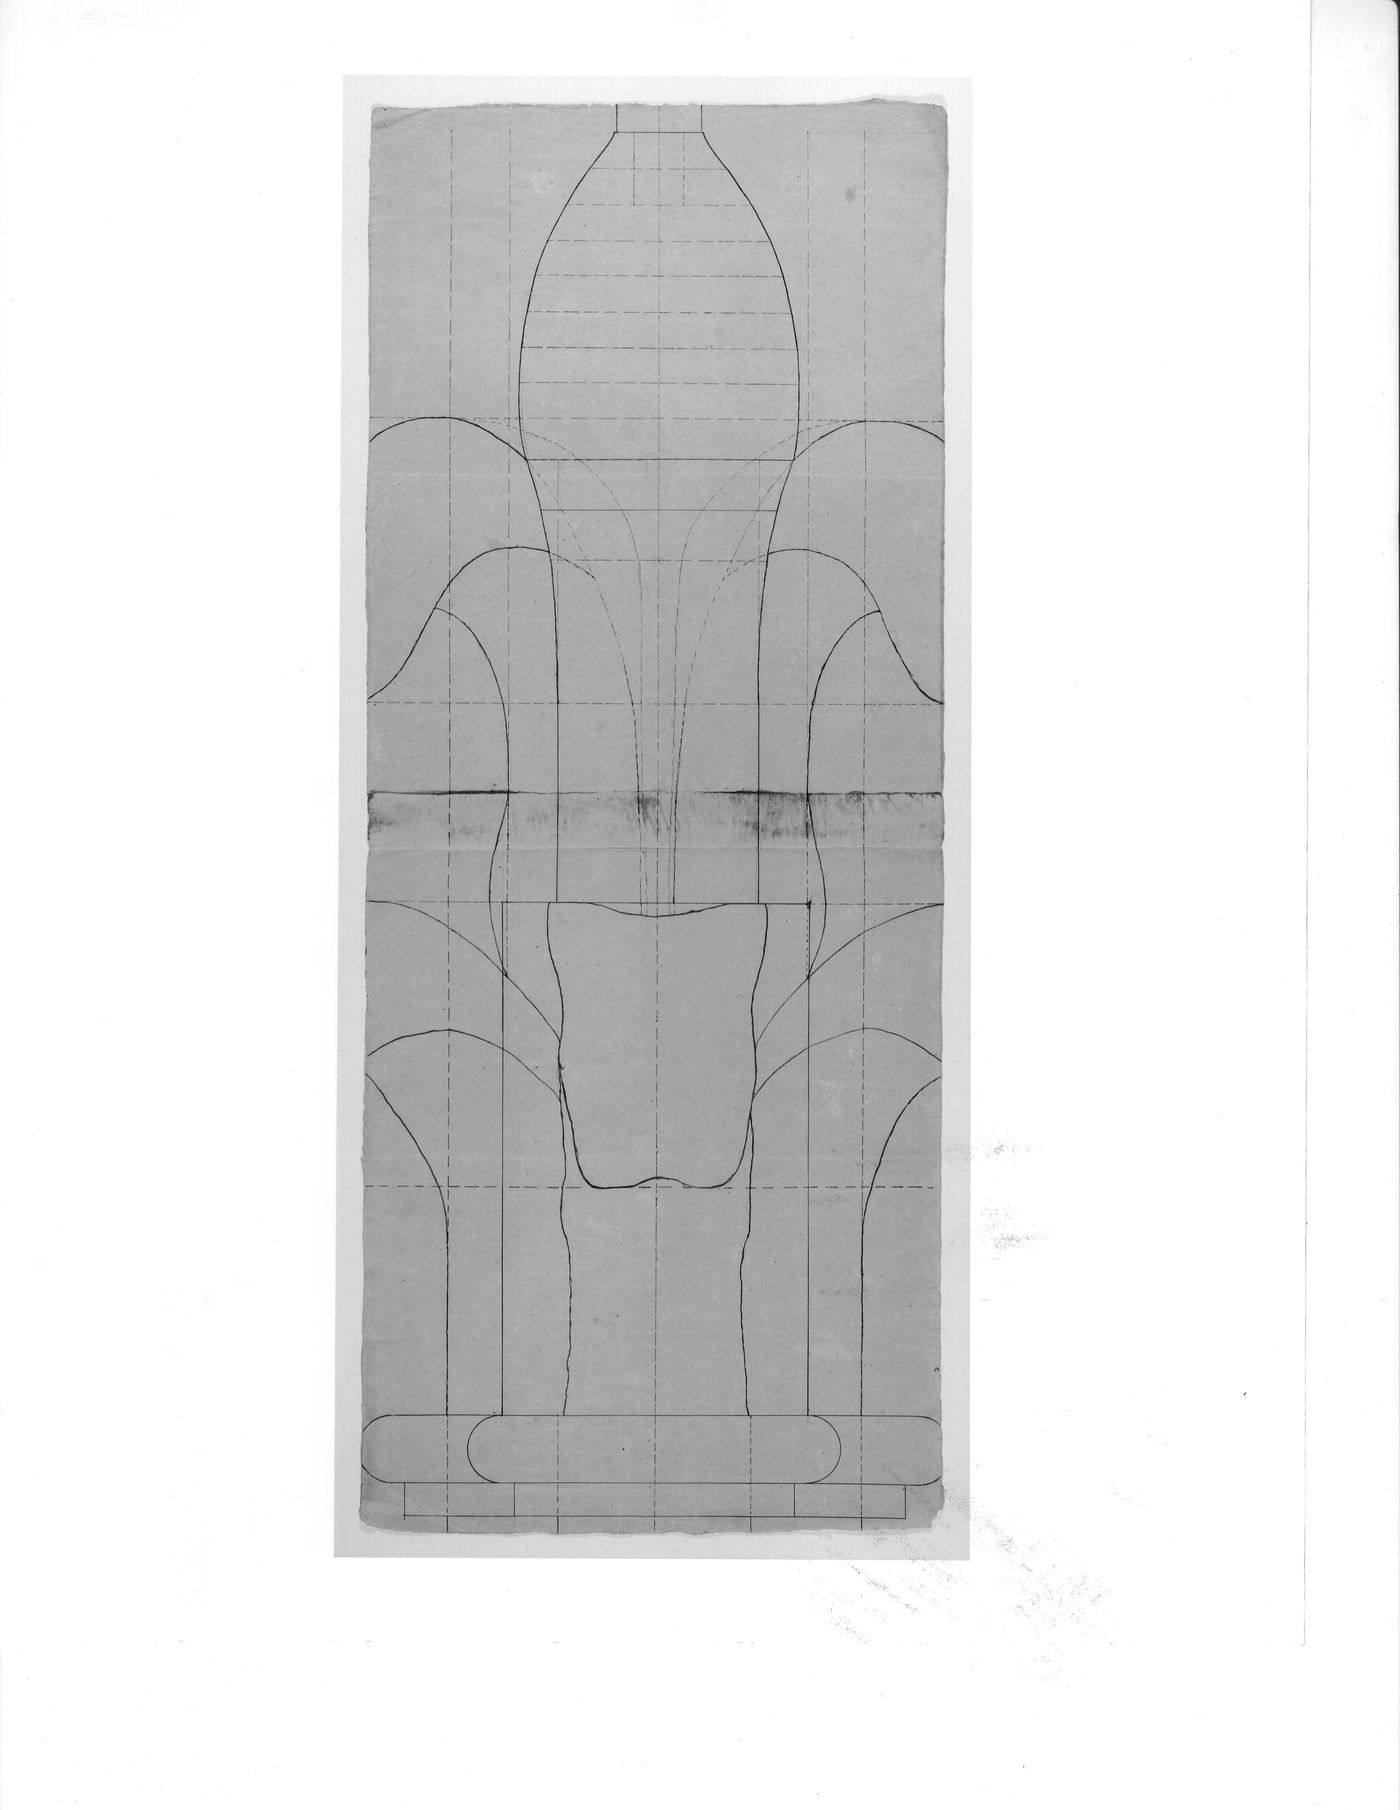 Elevation for a decorative detail for the high altar for Notre-Dame de Montréal